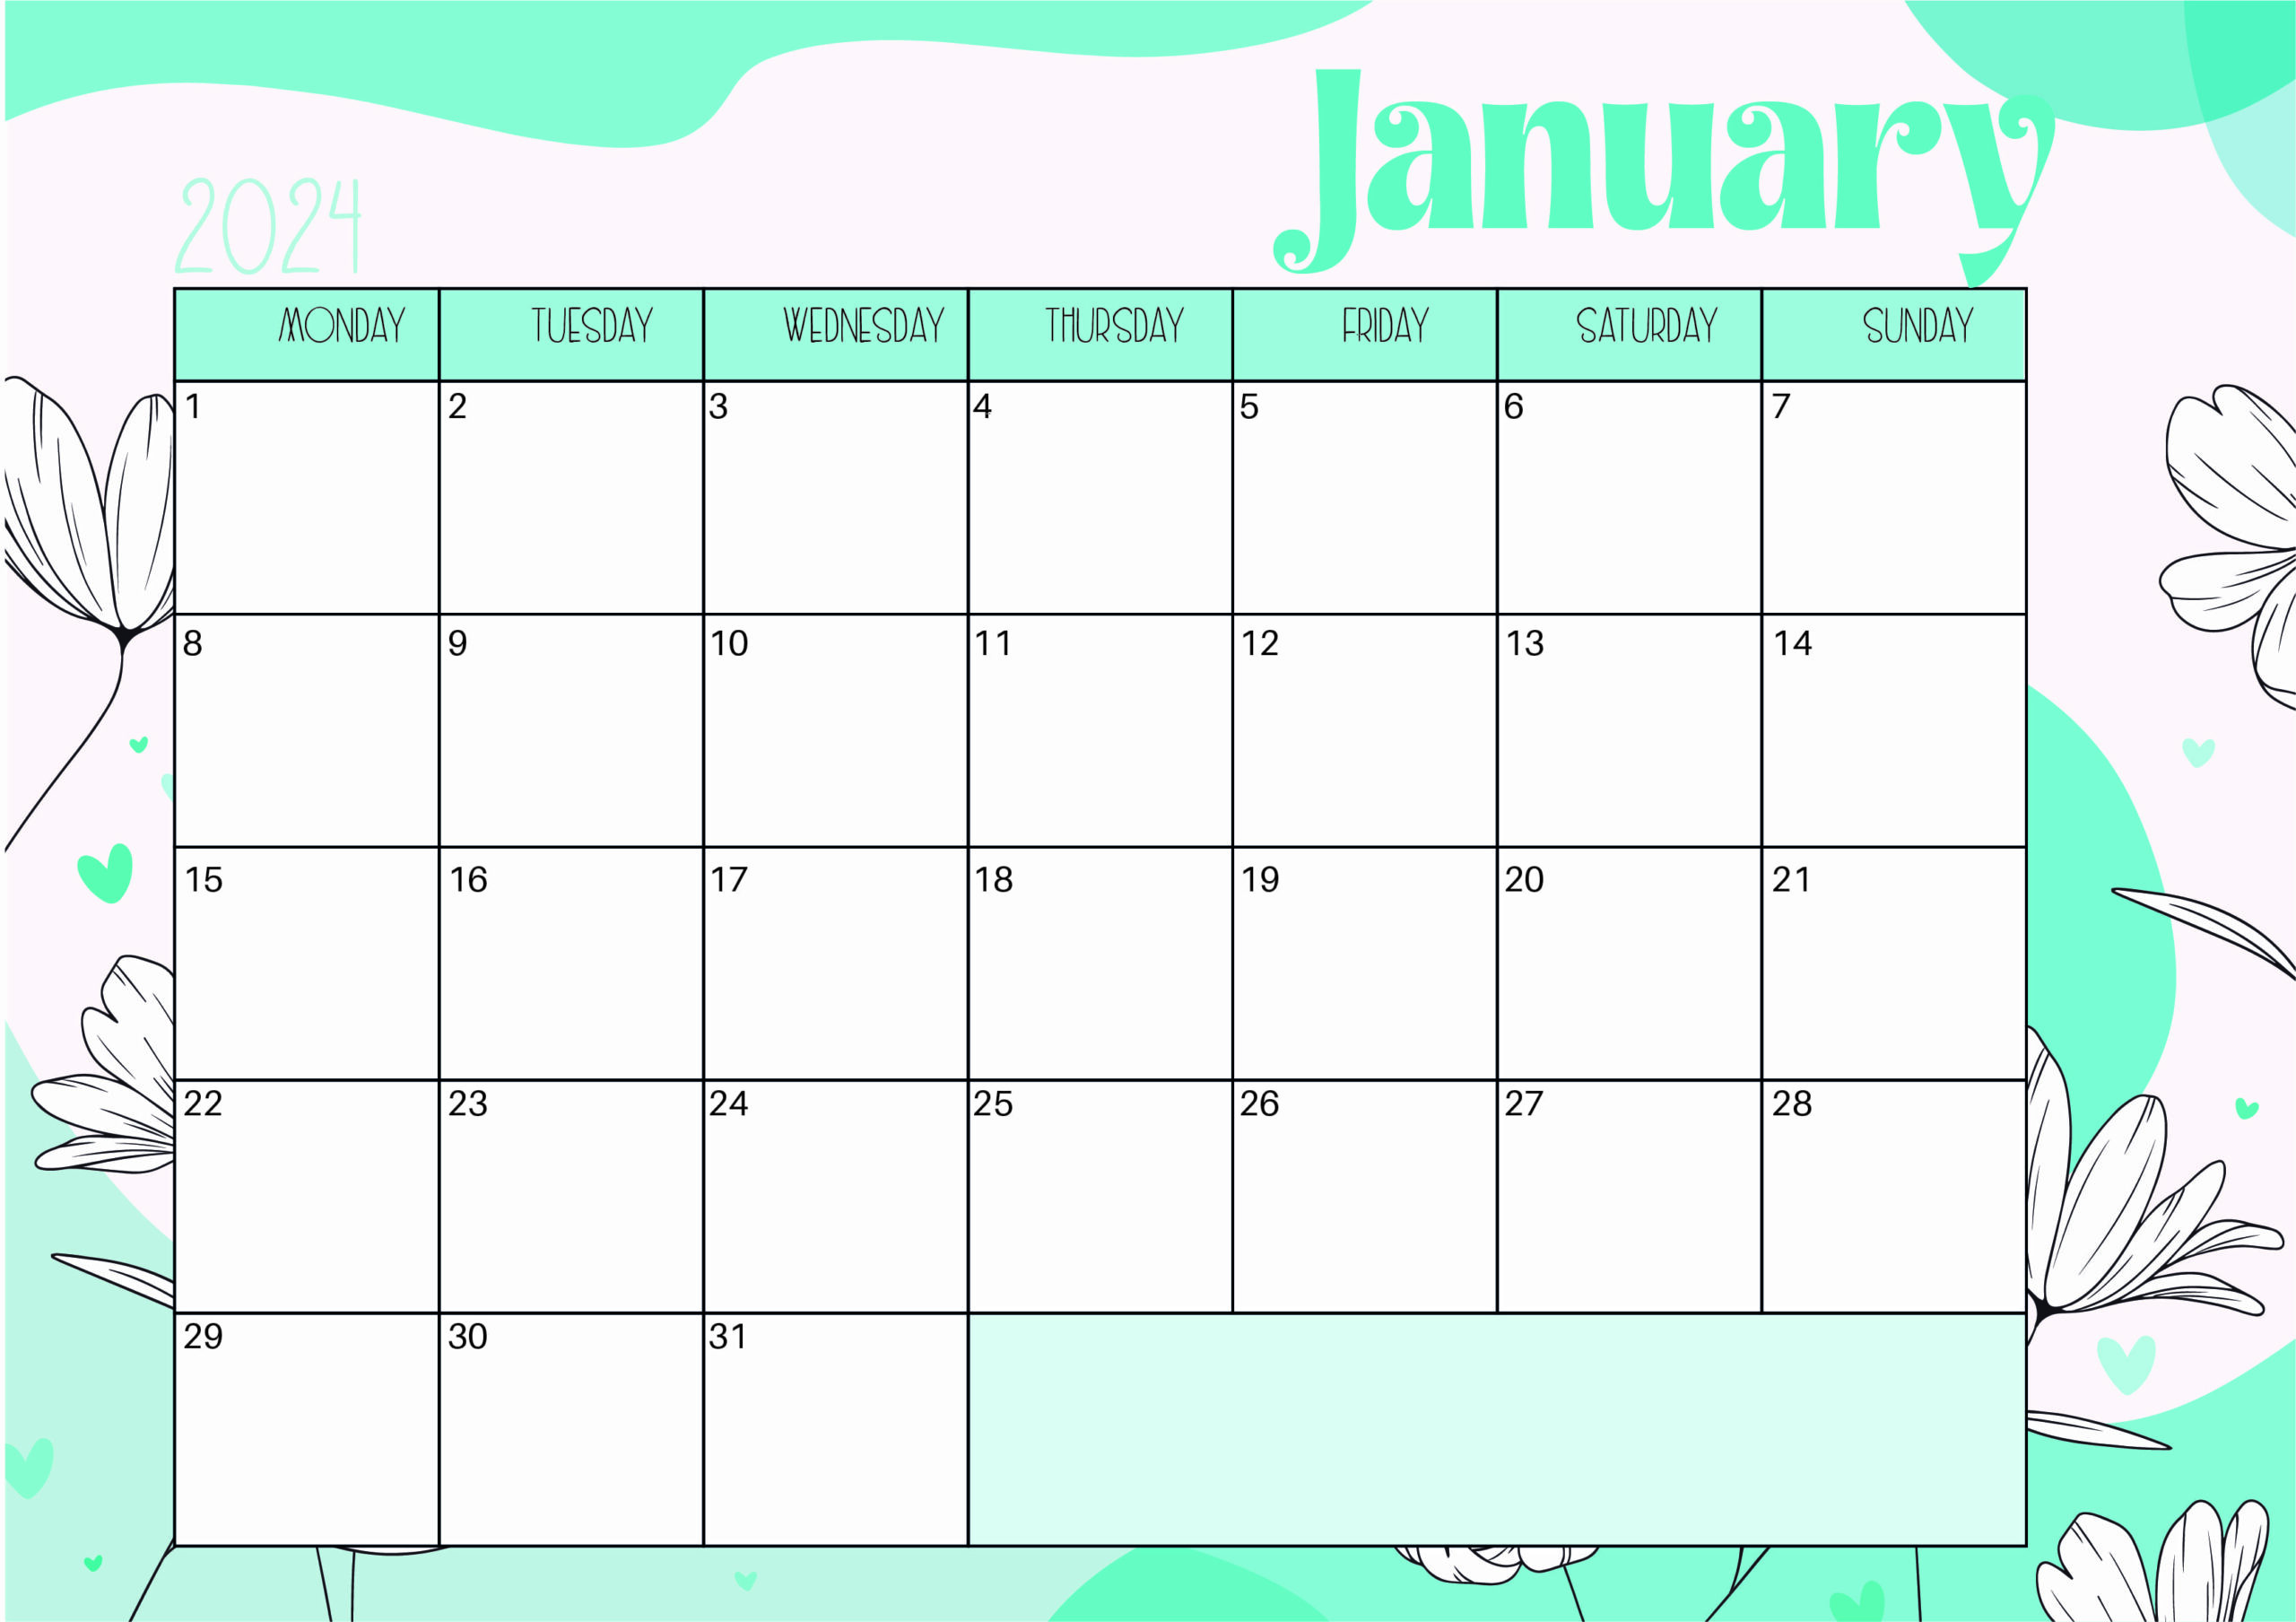 January 2024 Calendar for Printing